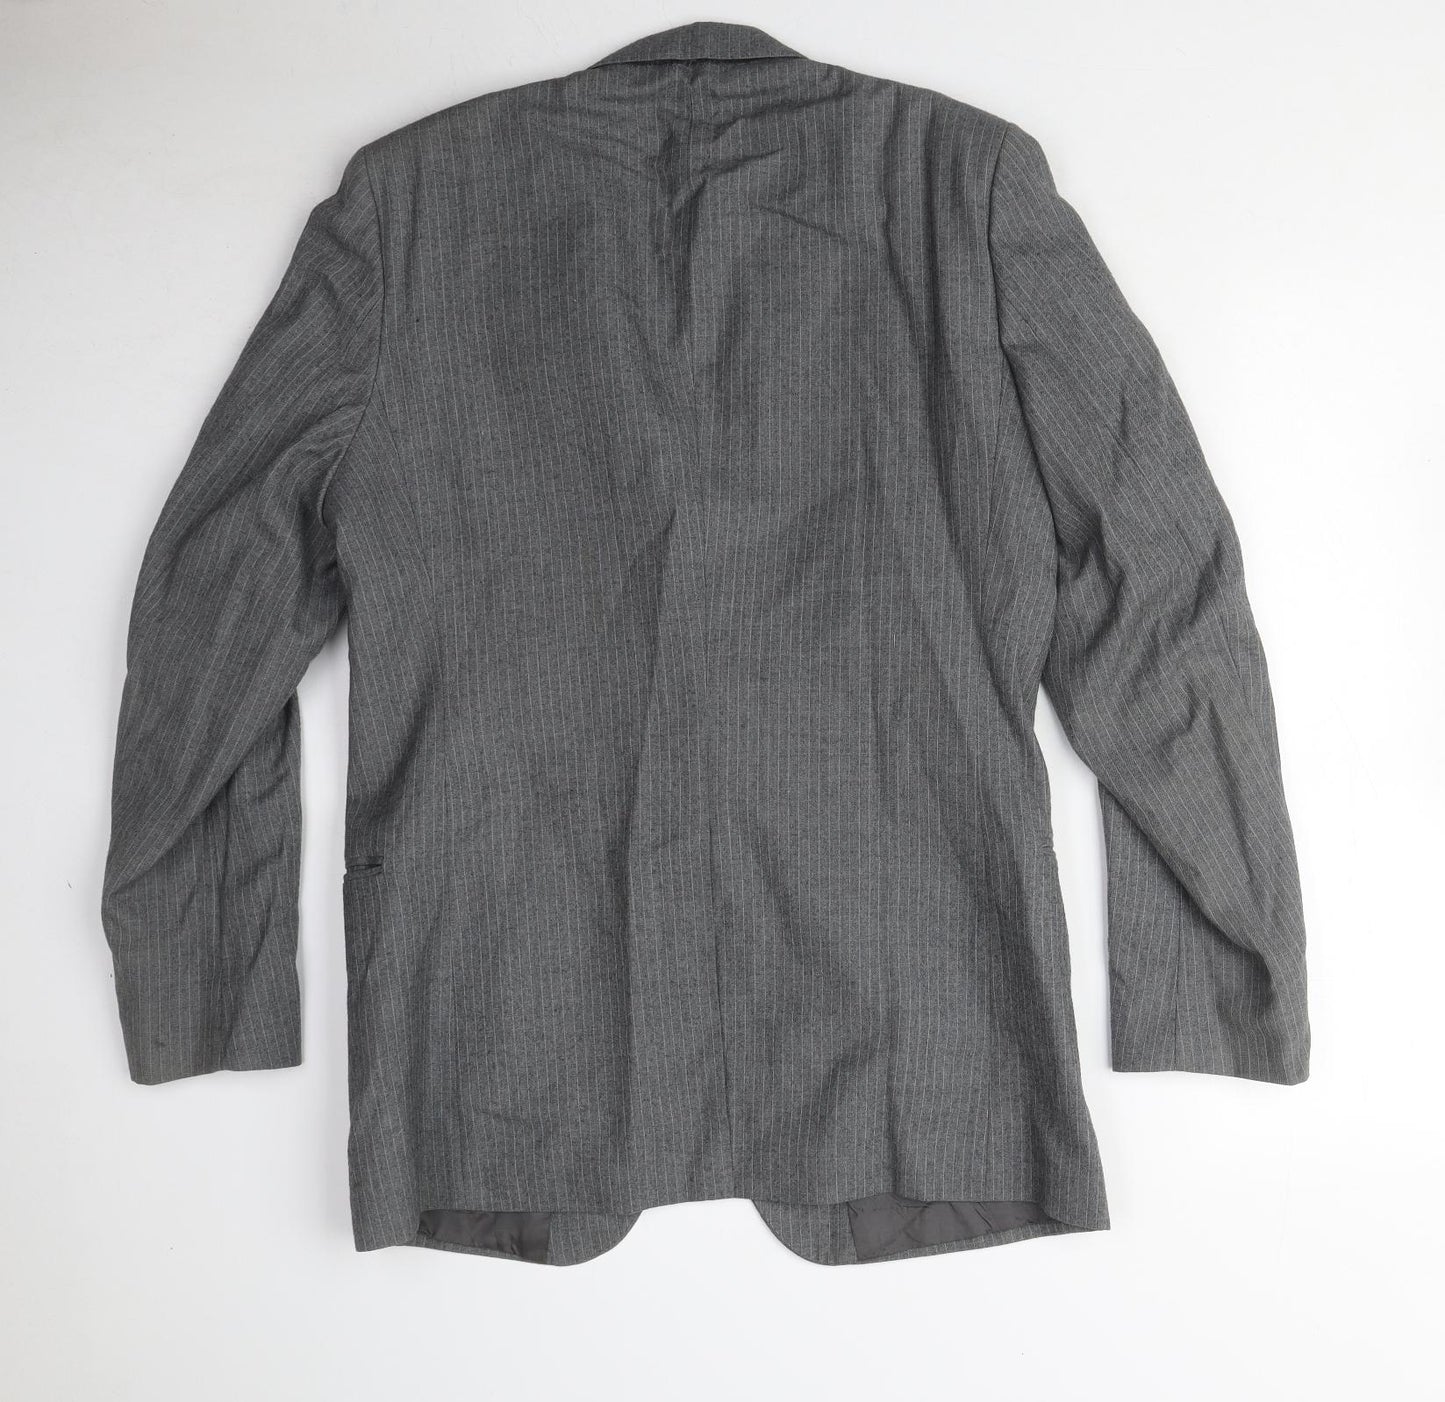 Pierre Pascal Mens Grey Striped Polyester Jacket Suit Jacket Size 38 Regular